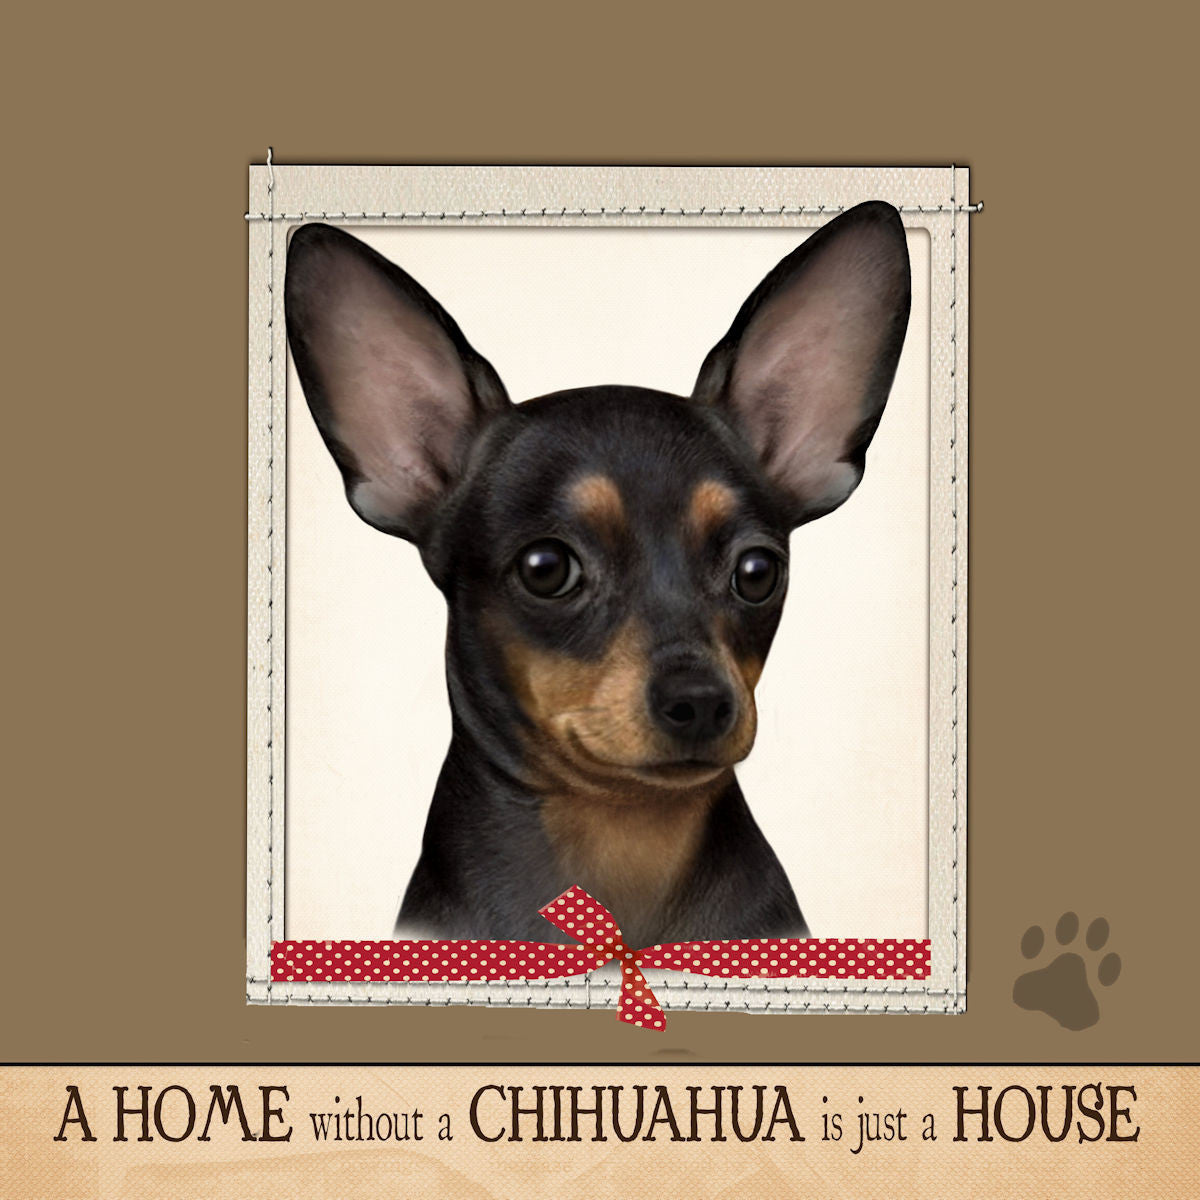 Chihuahua Black Dog Breed Throw Pillow